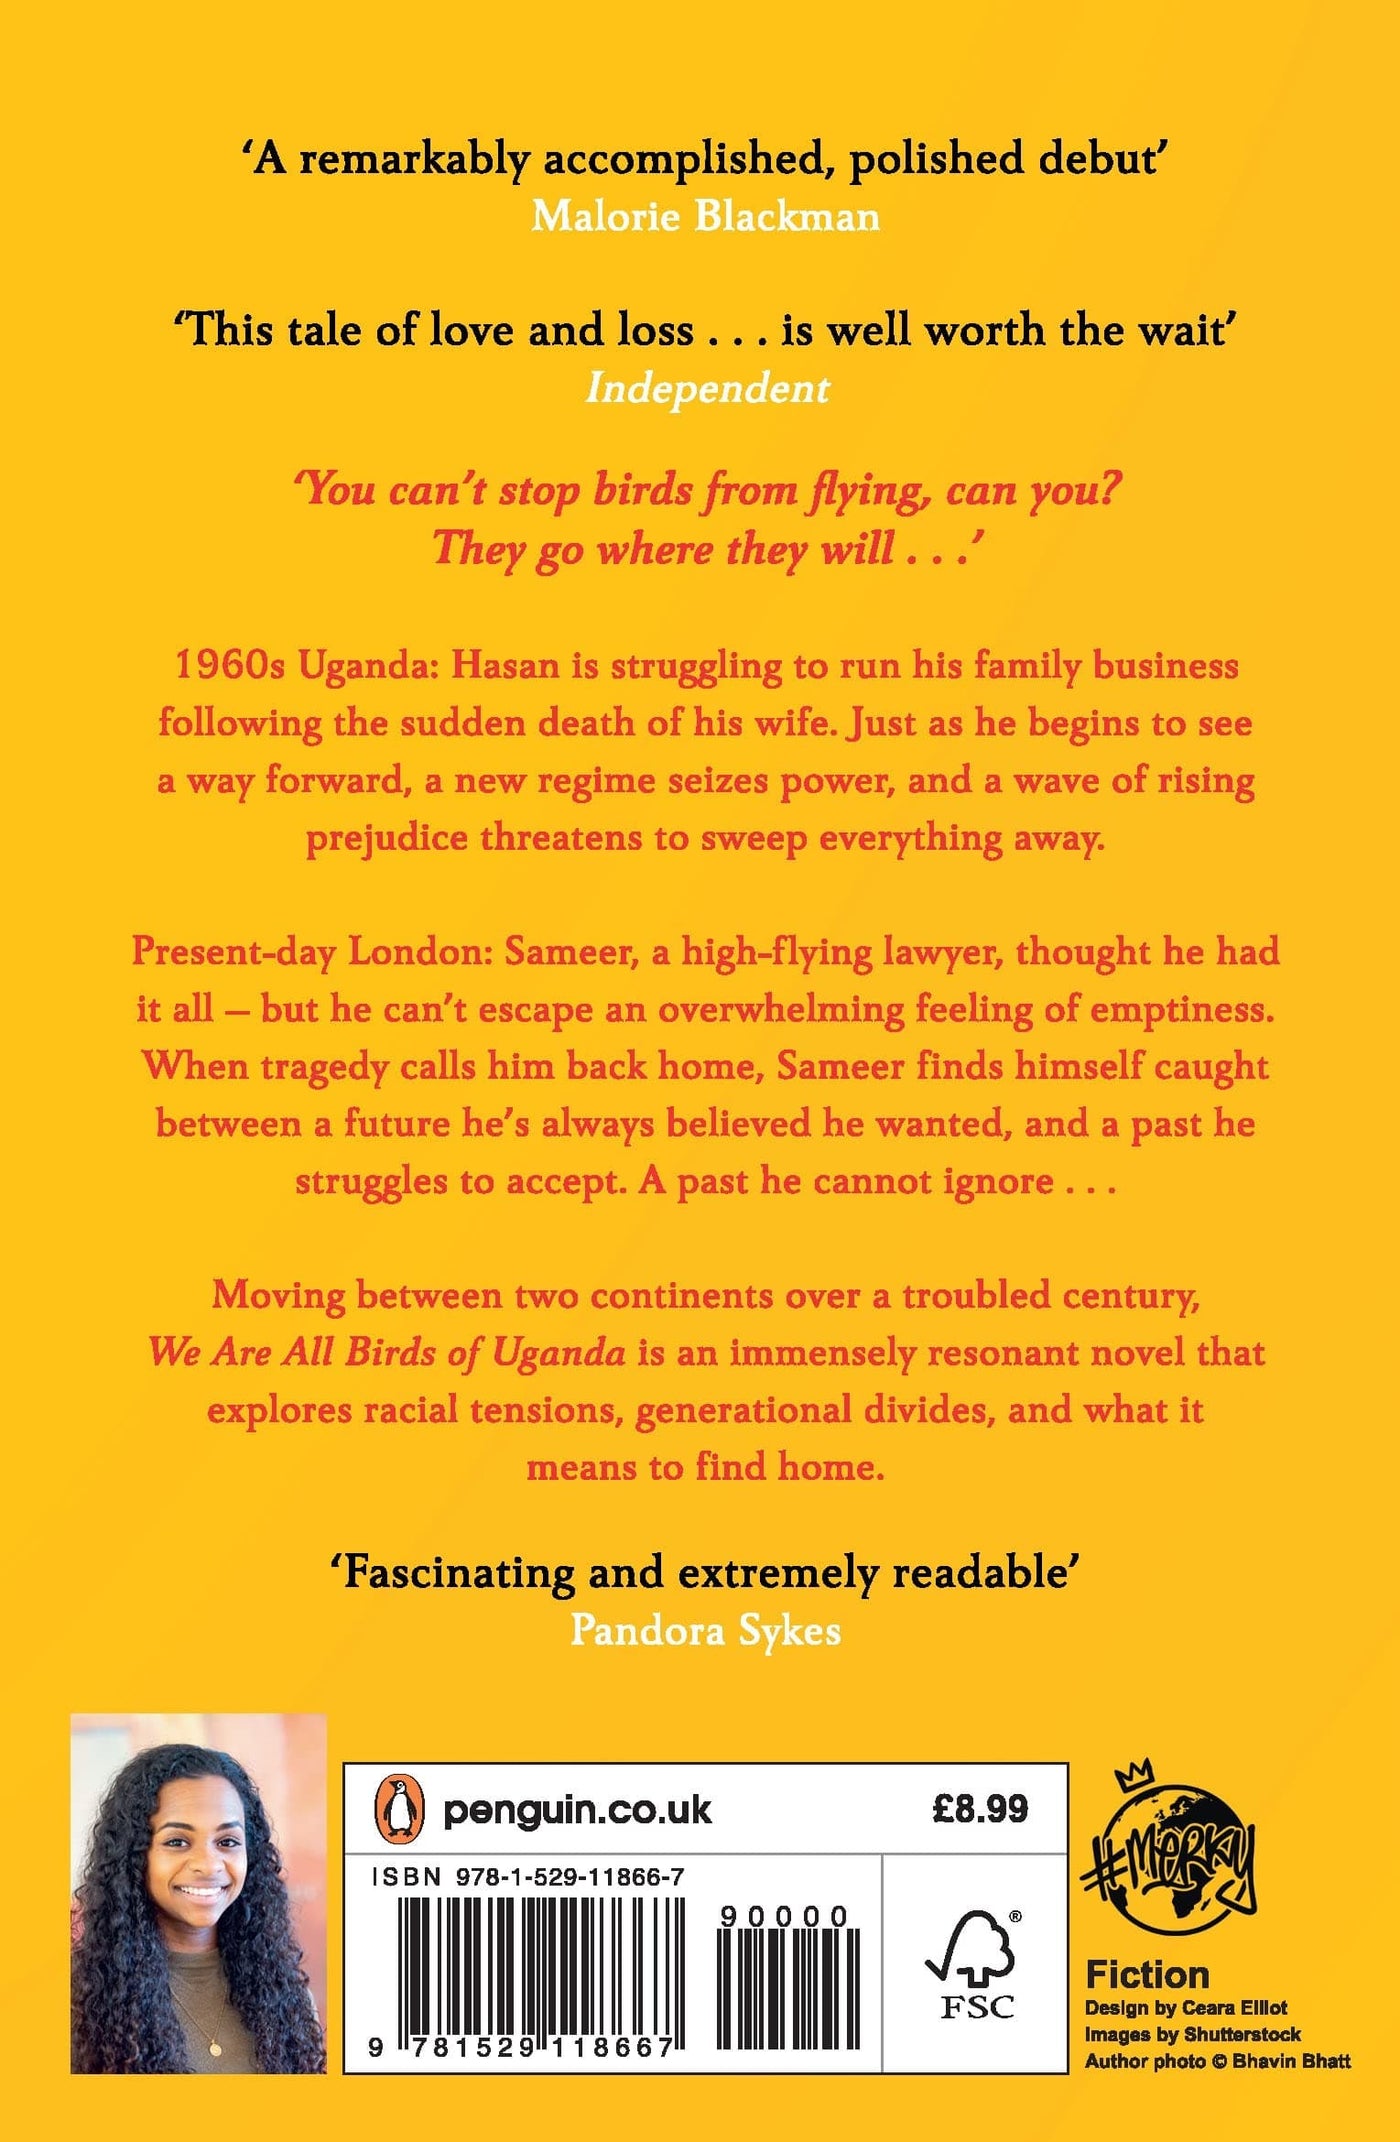 We Are All Birds of Uganda: Hafsa Zayyan Paperback